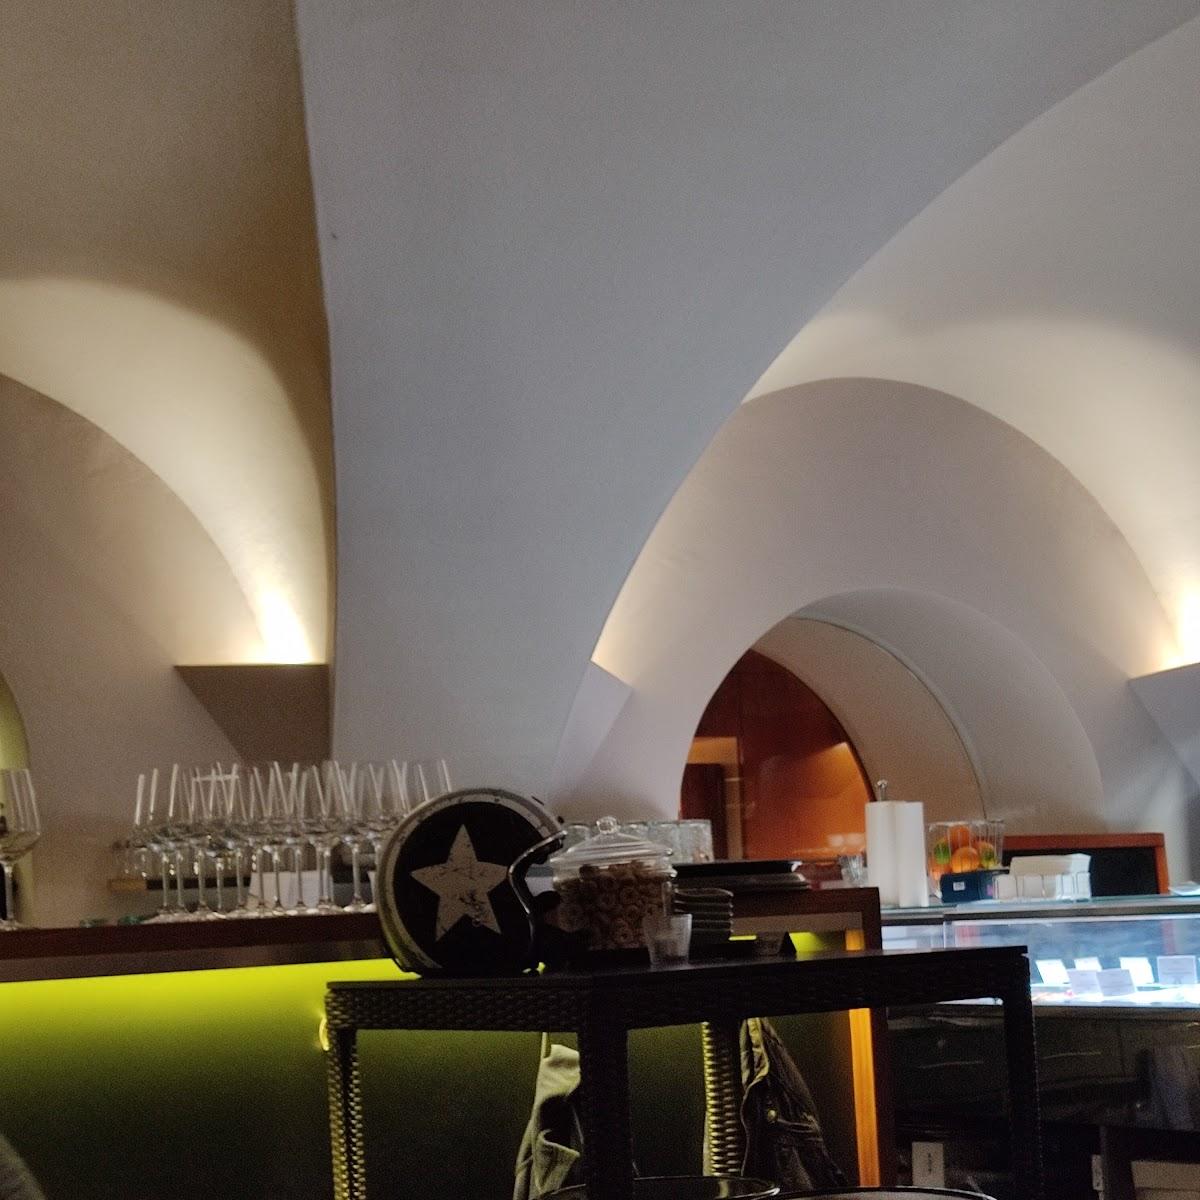 Restaurant "Café Cosimo - Die Tramezzini Manufaktur in" in Graz